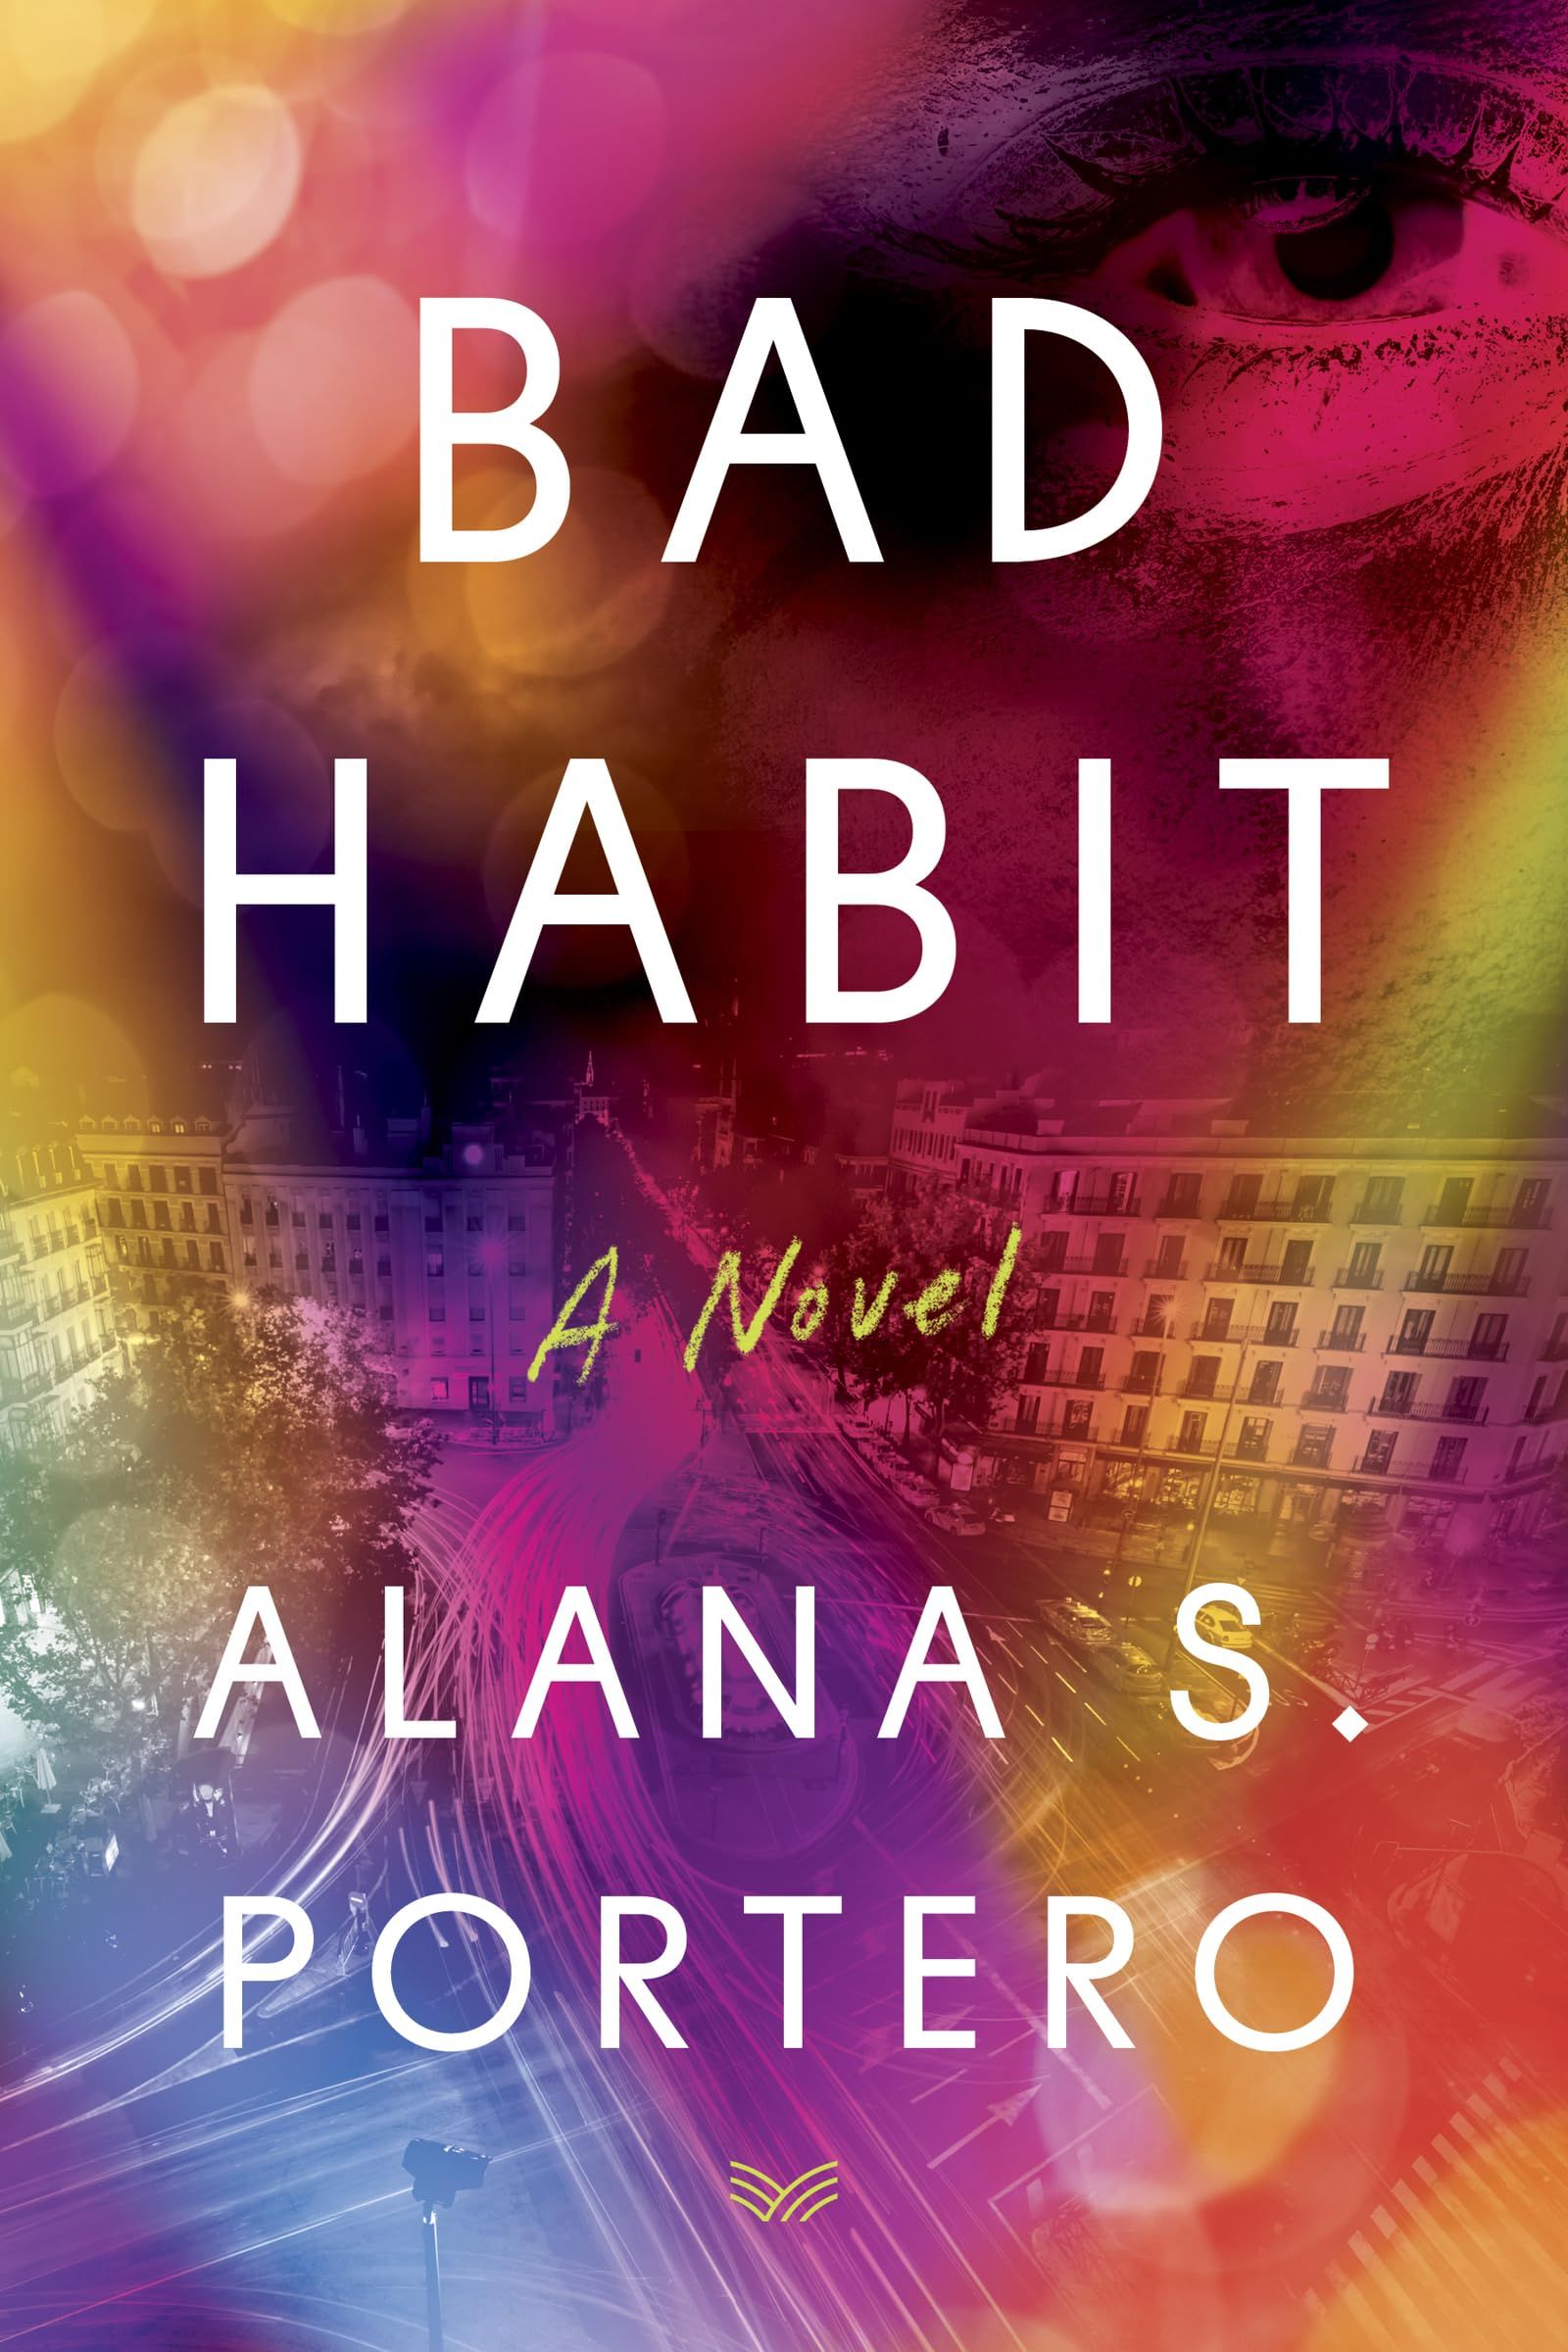 cover of Bad Habit by Alana S. Portero, translated by Mara Faye Lethem